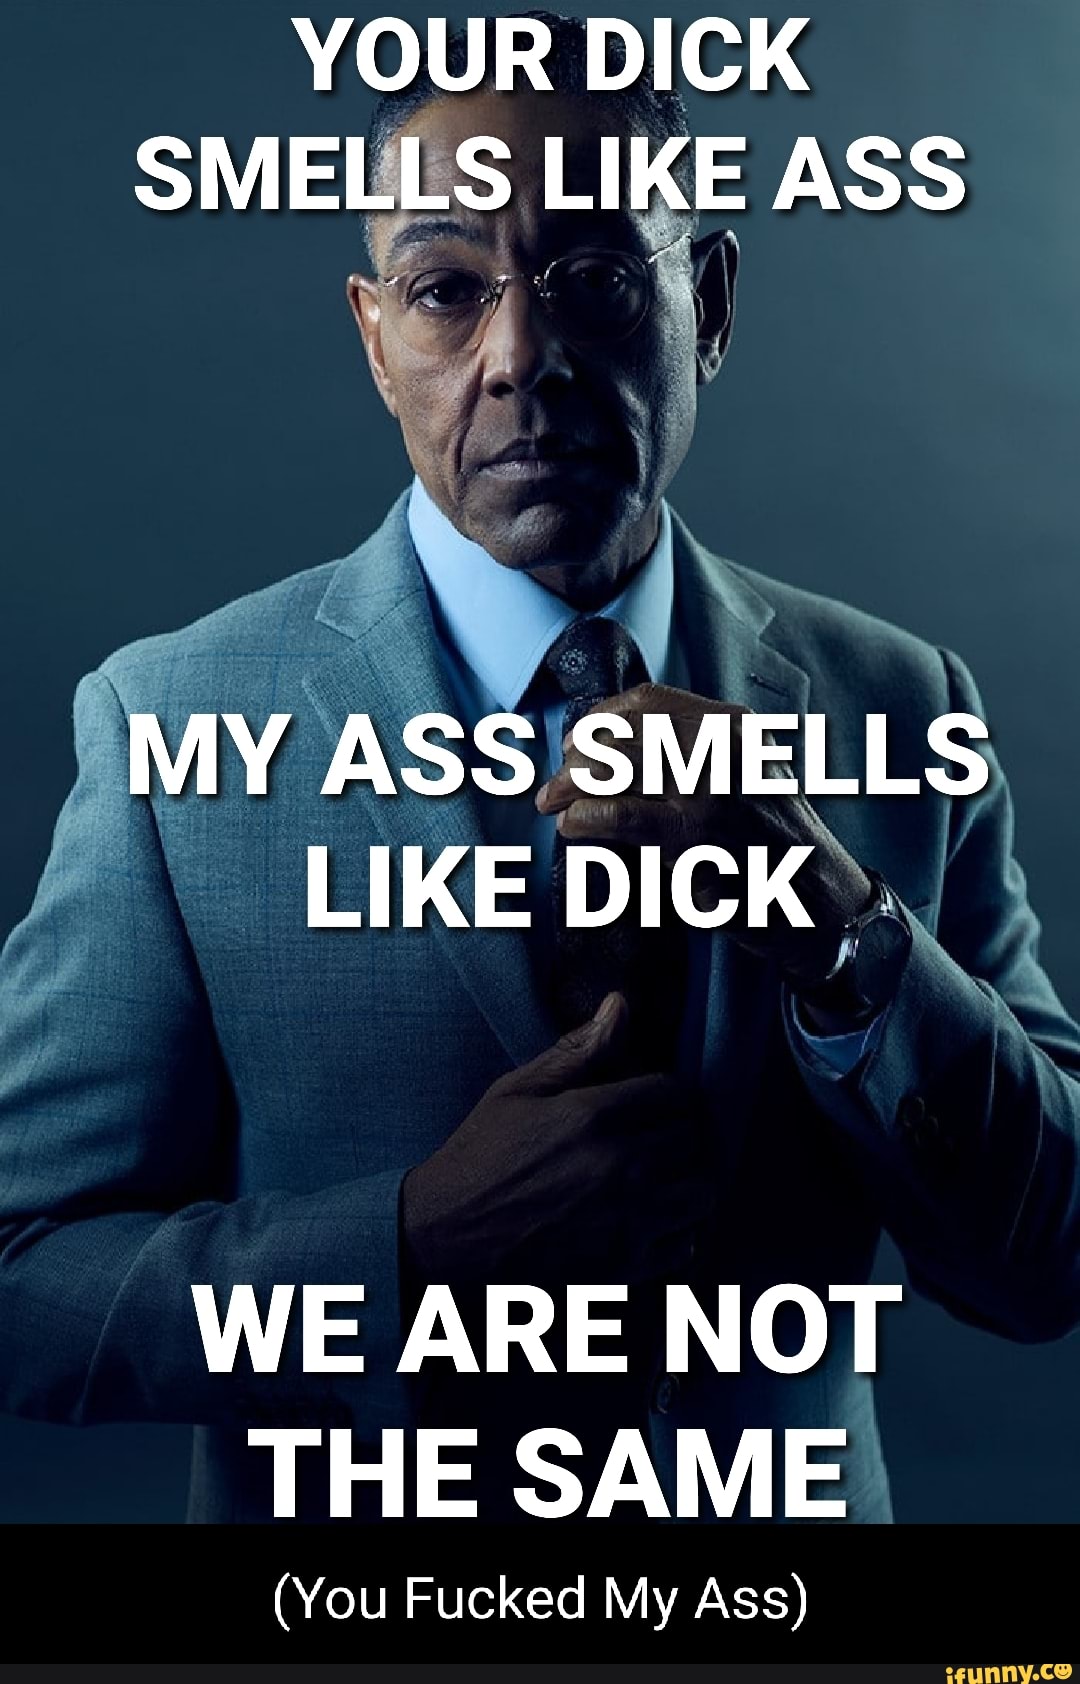 Dick smells like piss